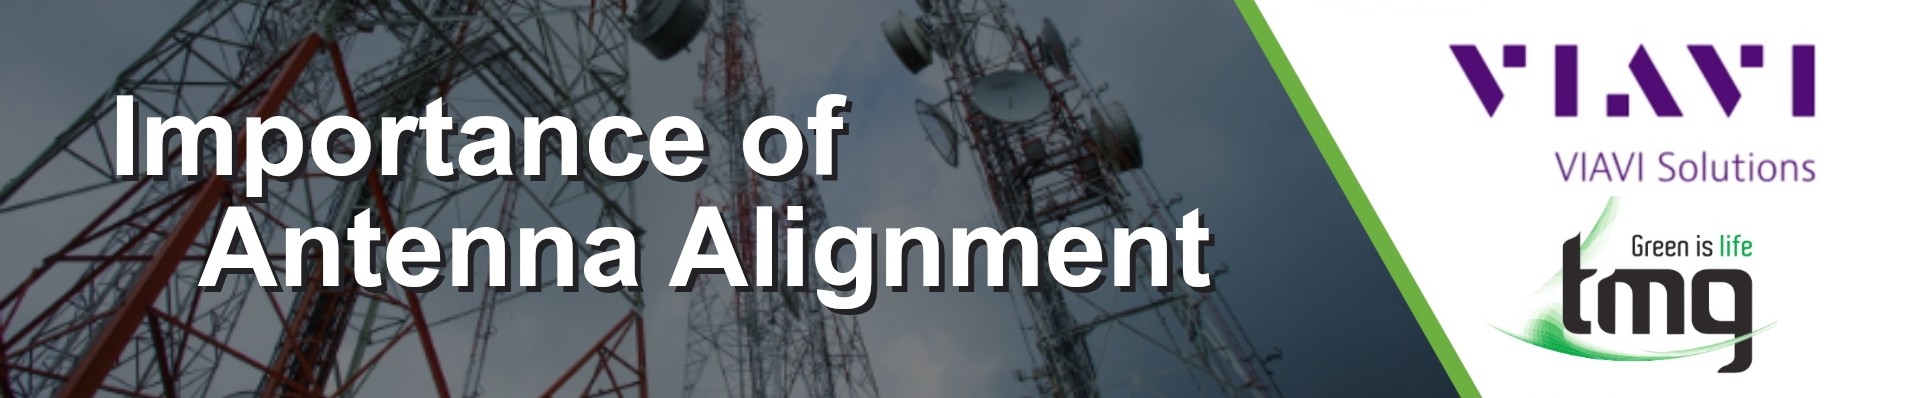 The Importance of Antenna Alignment | VIAVI